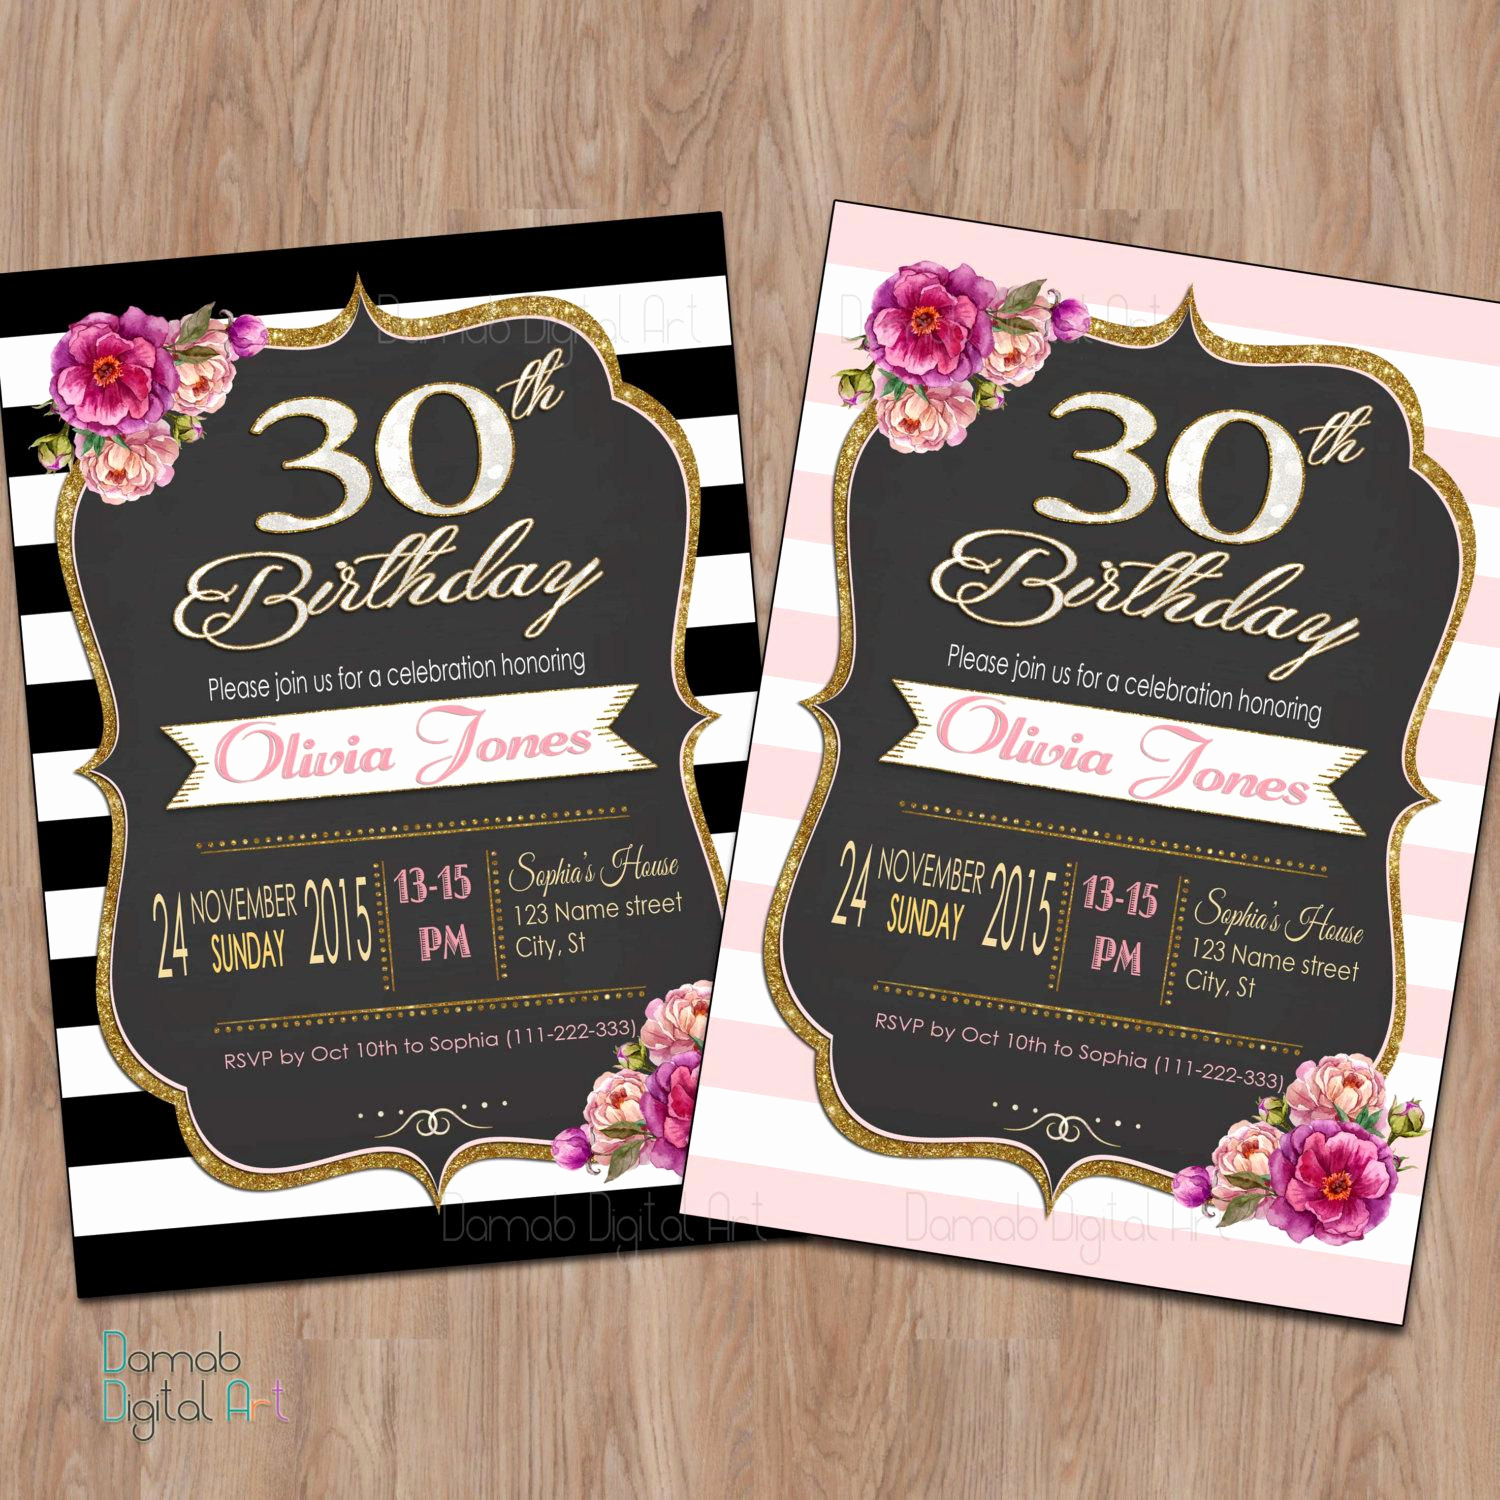 30th Birthday Party Invitation Wording New 20 Interesting 30th Birthday Invitations themes – Wording